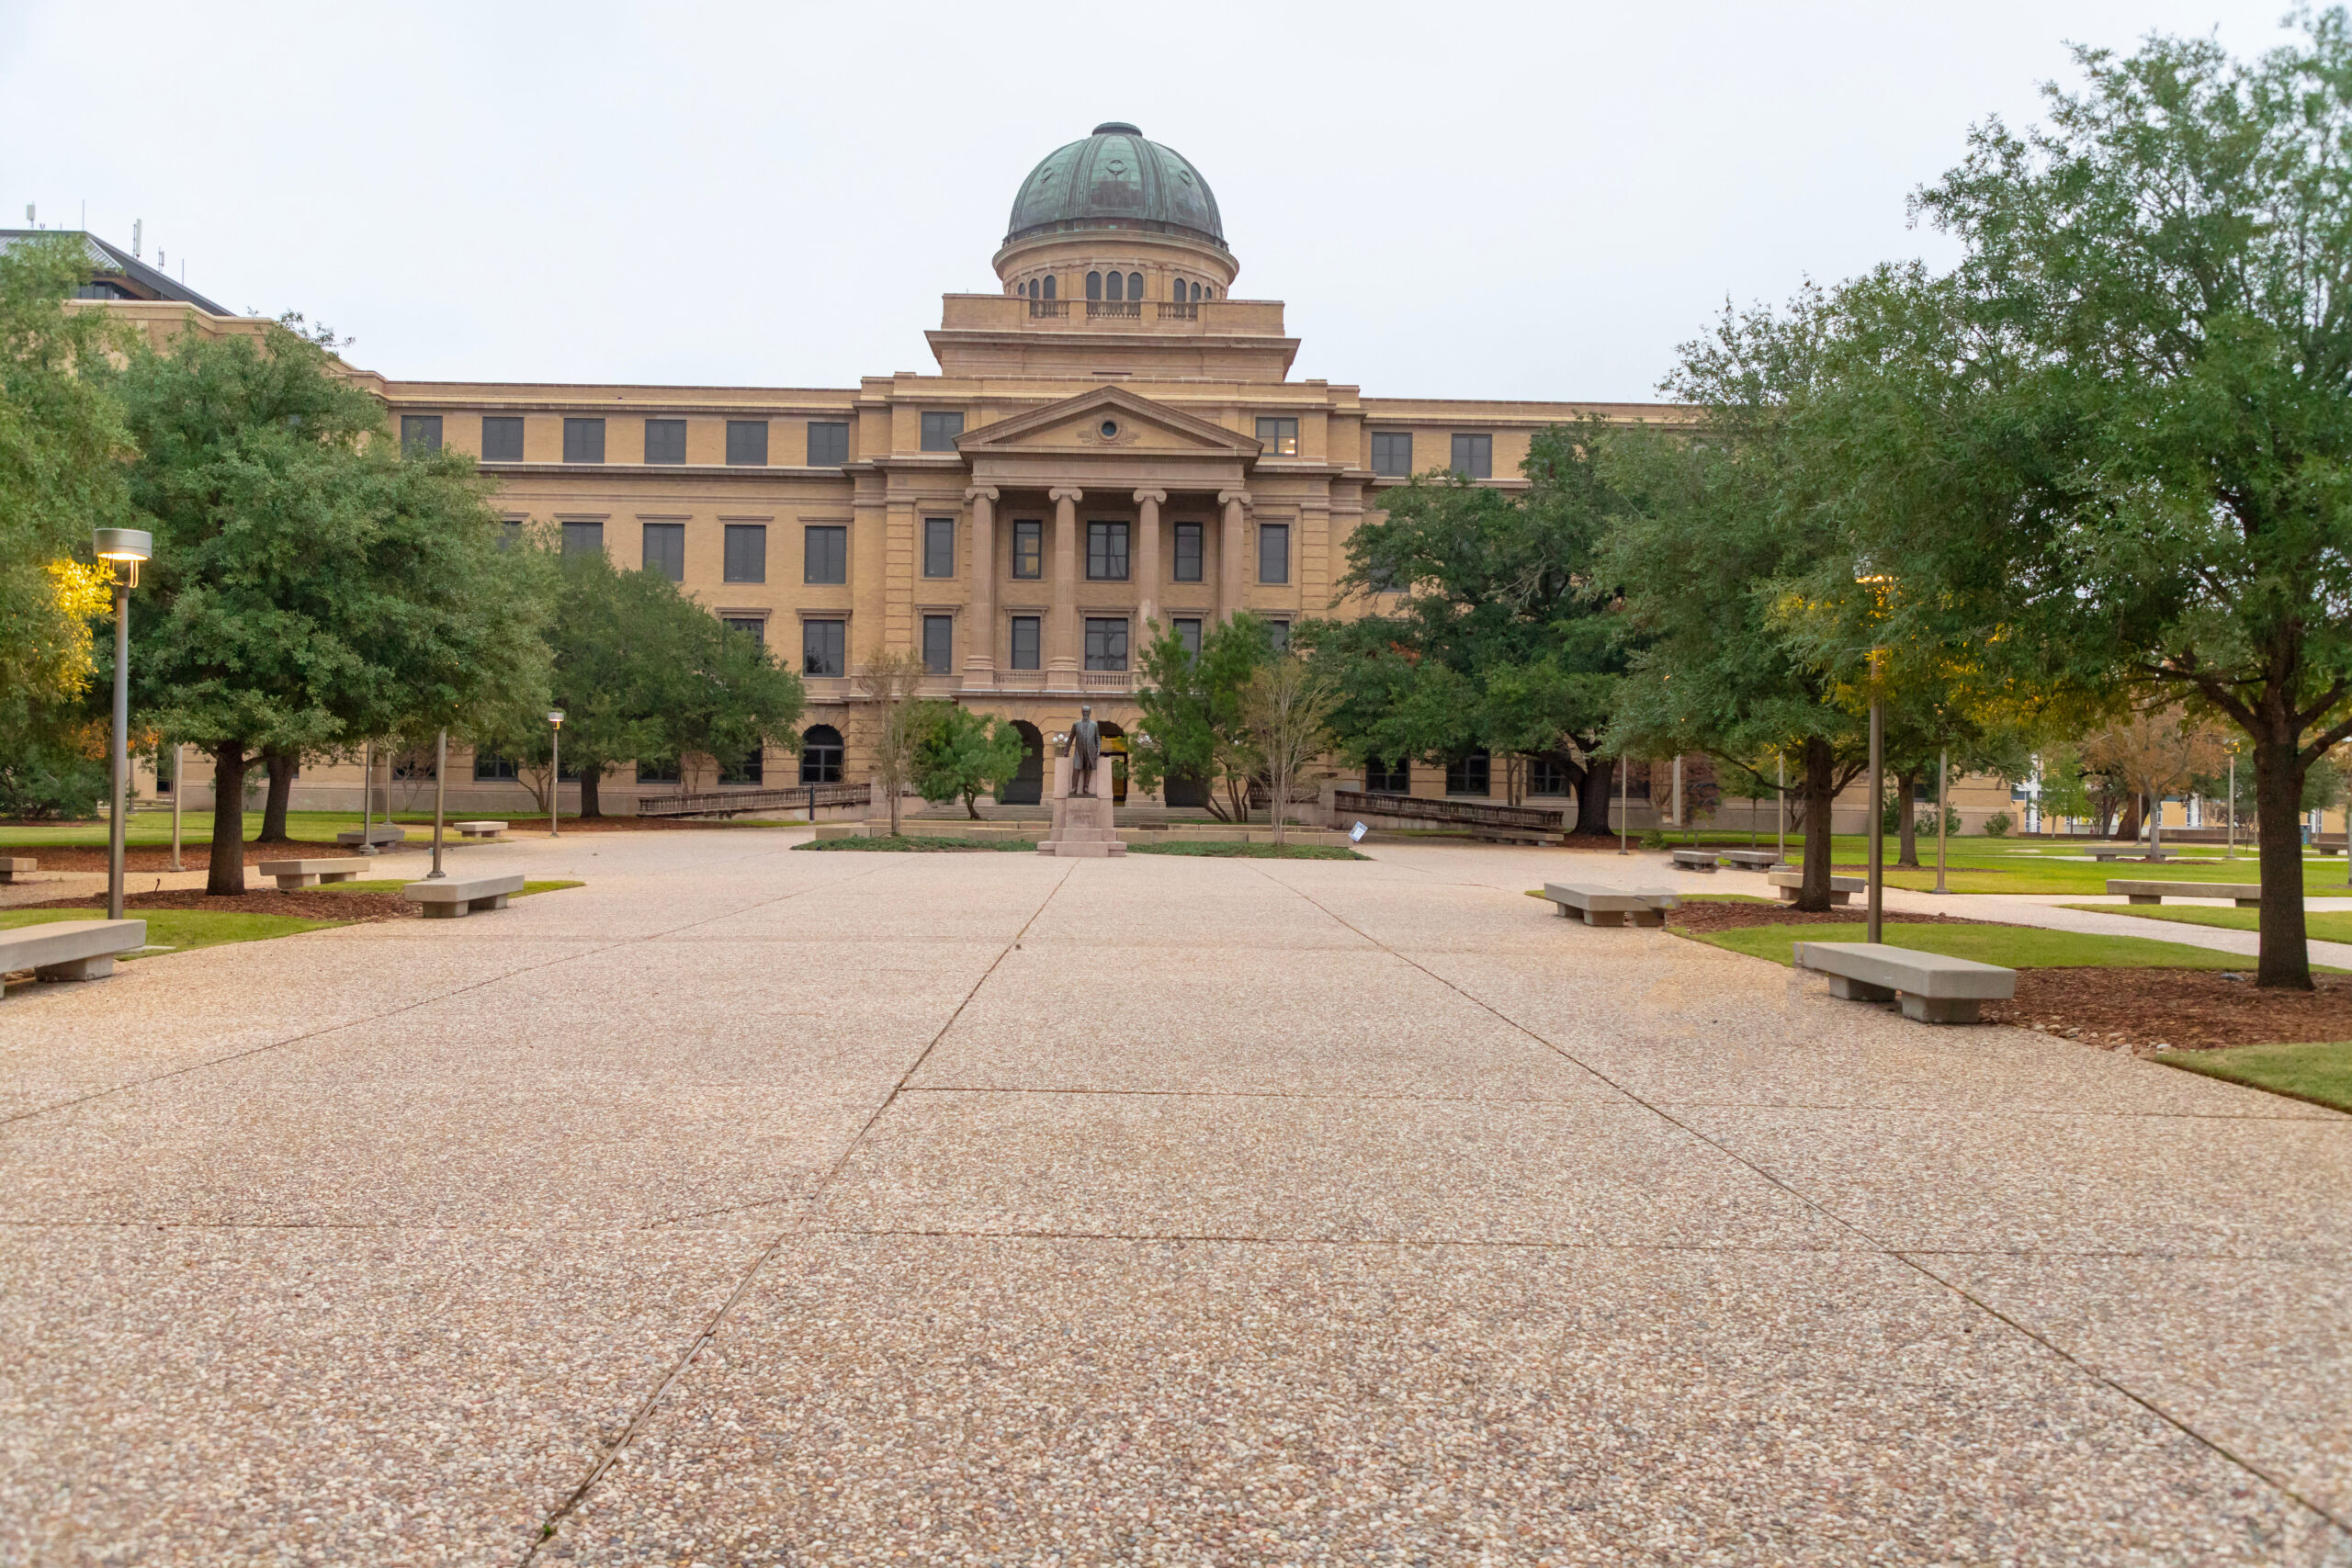 Texas A&M University is a public land-grant research university